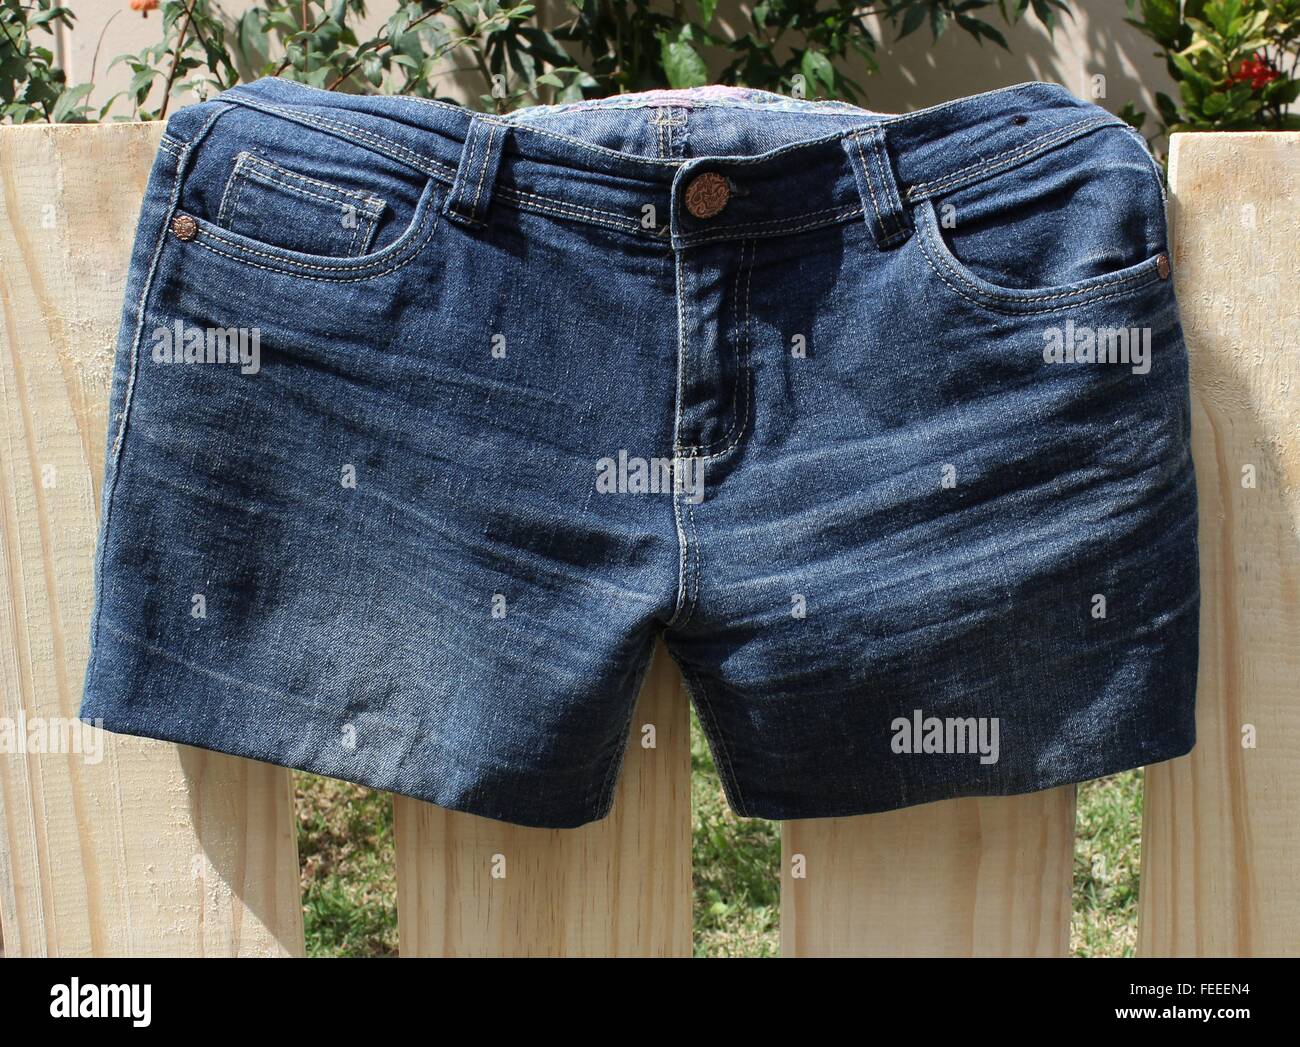 Short jeans before applying bleach. Stock Photo